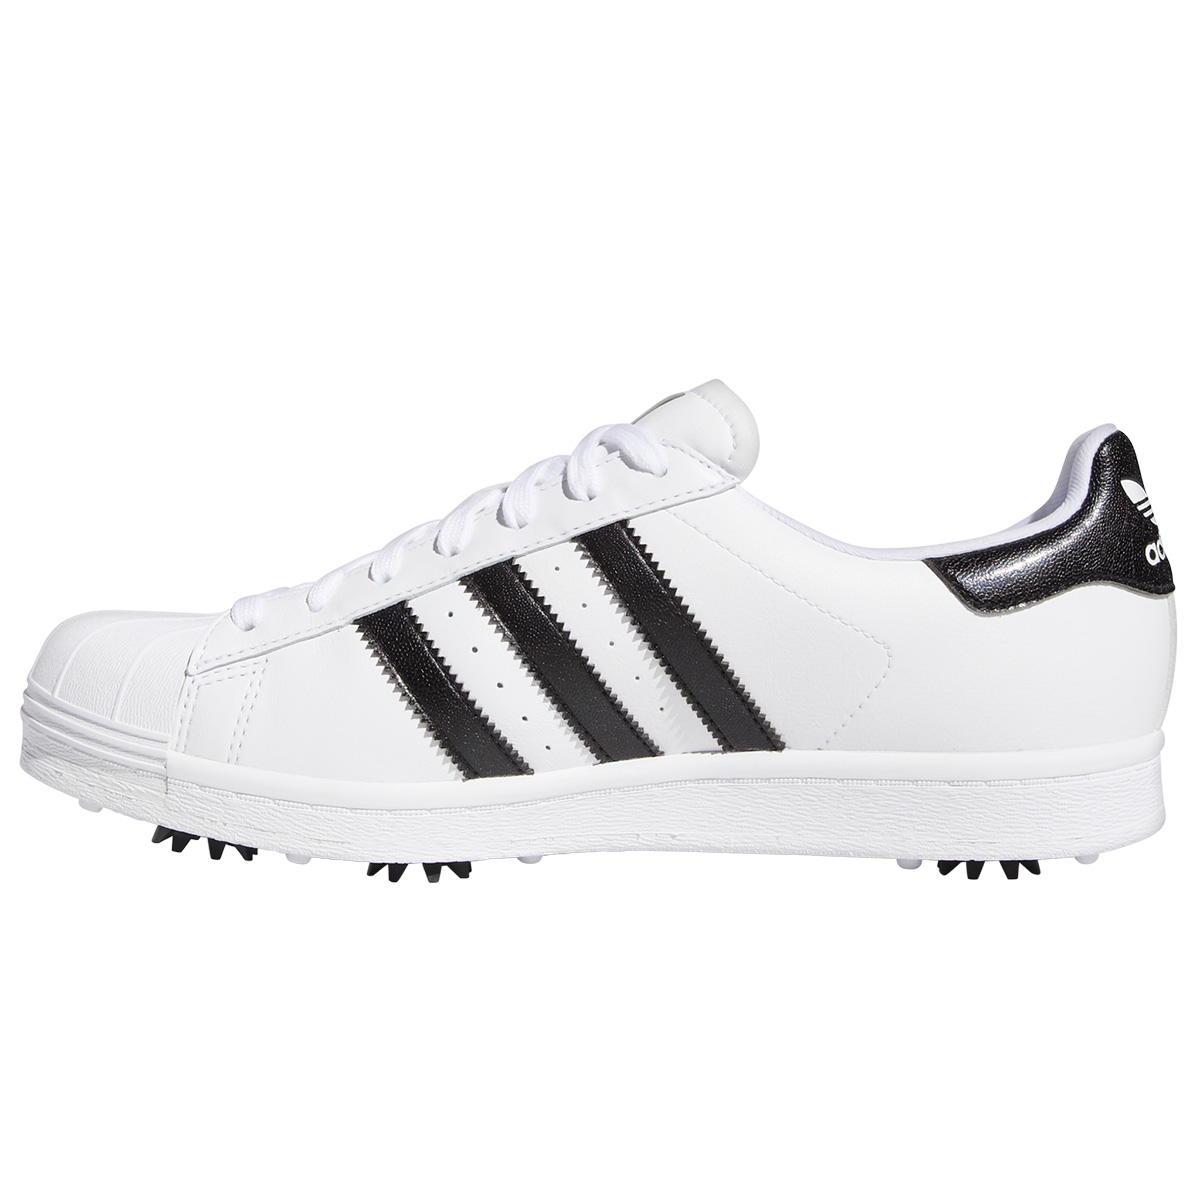 adidas shell toe golf shoes